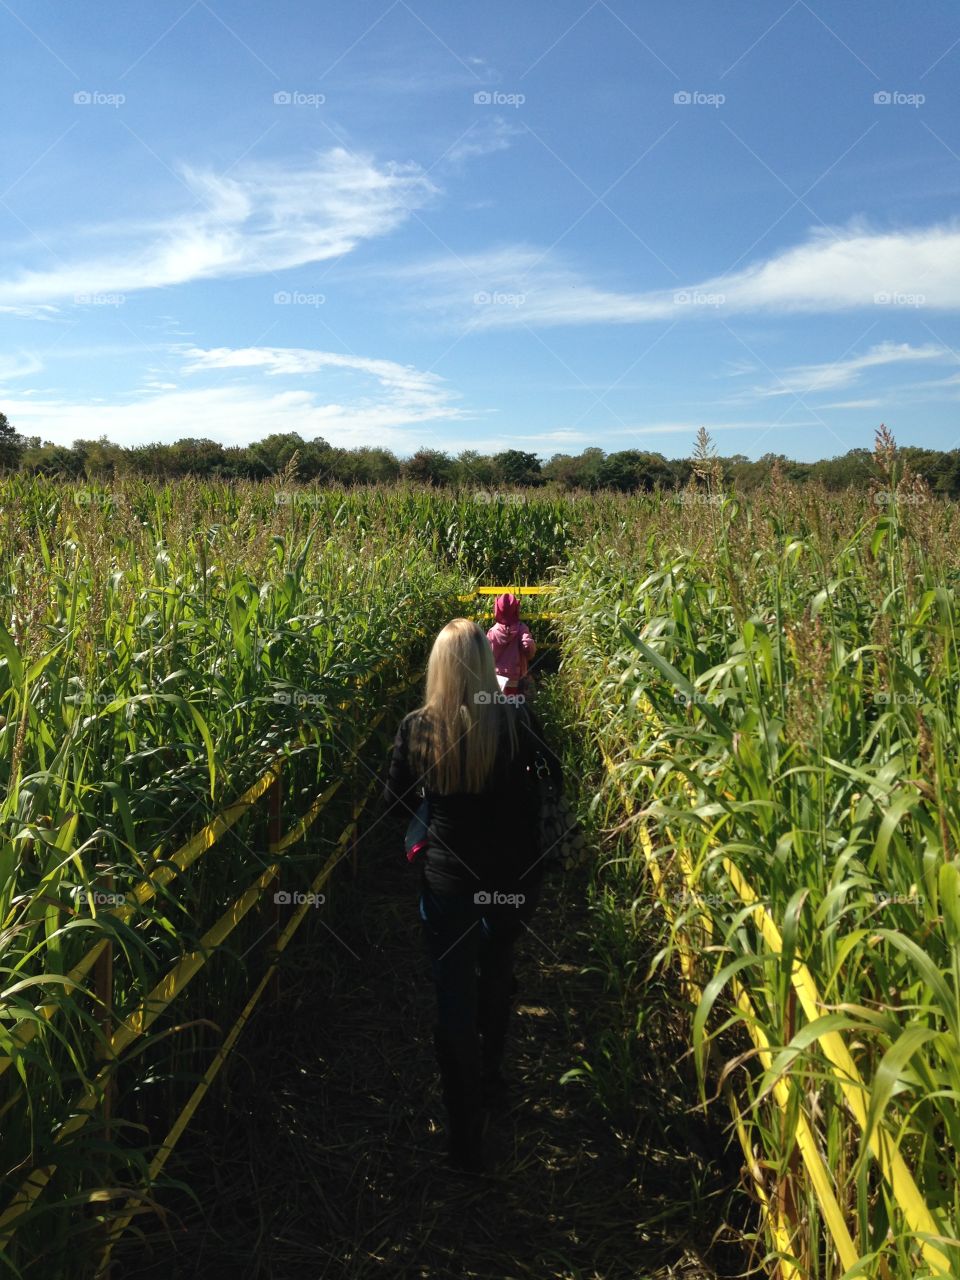 Solving the corn maze